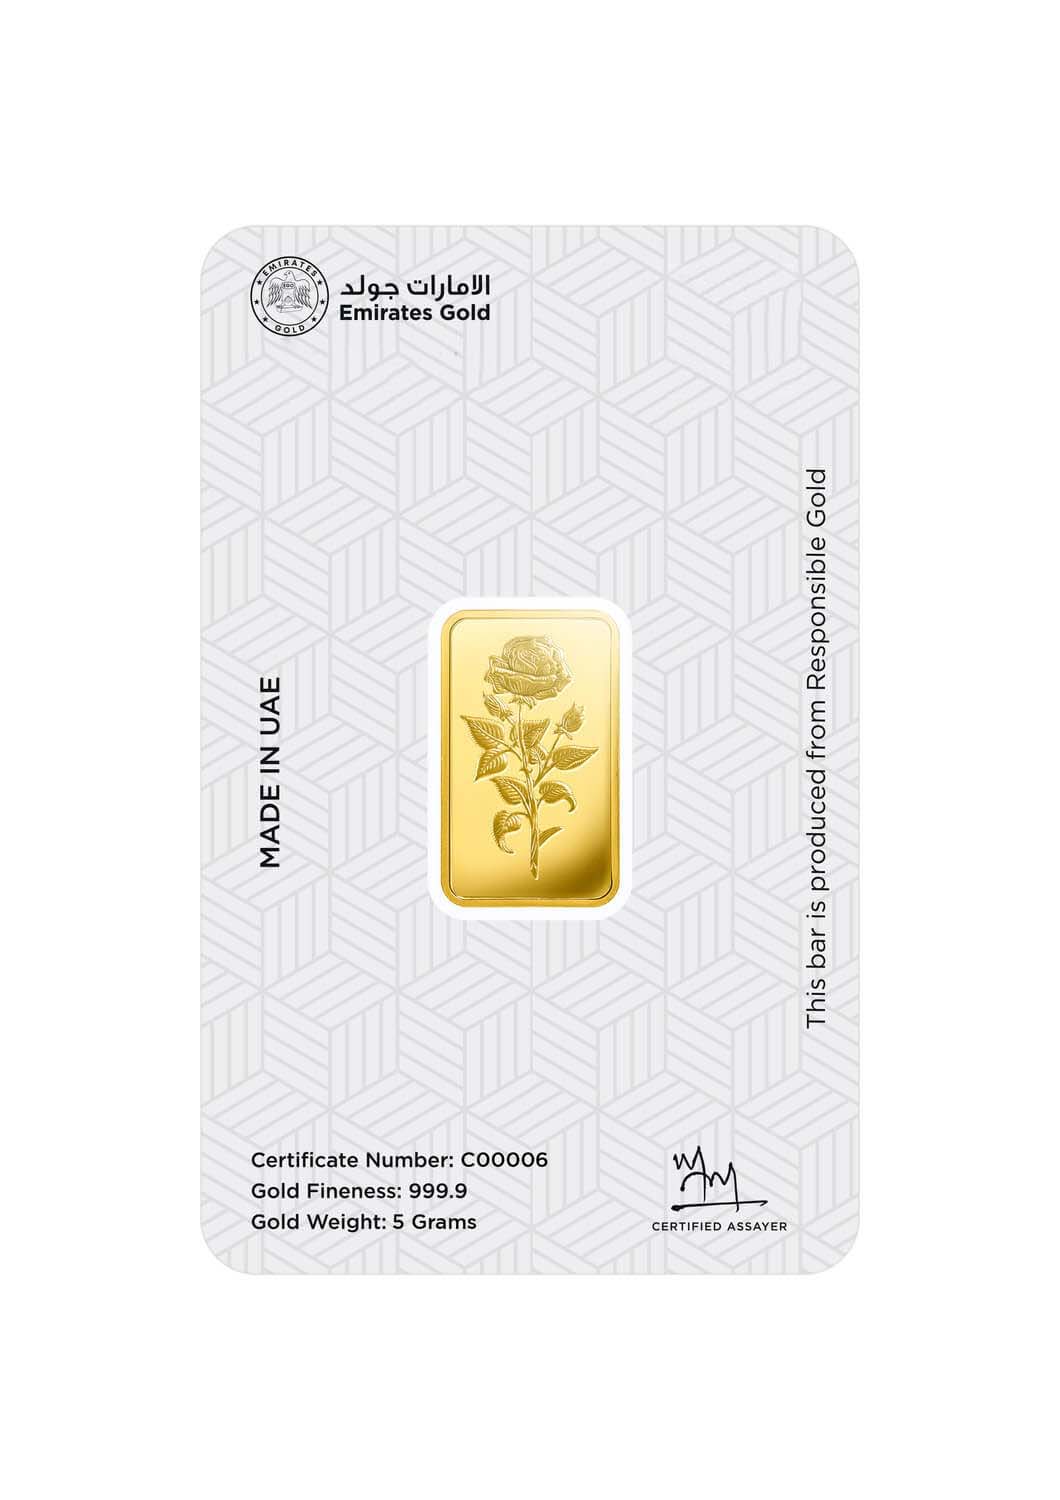 Emirates Gold 5g Gold Bar Fine Gold 999.9 Purity - 5 Grams - Saleh Sallom